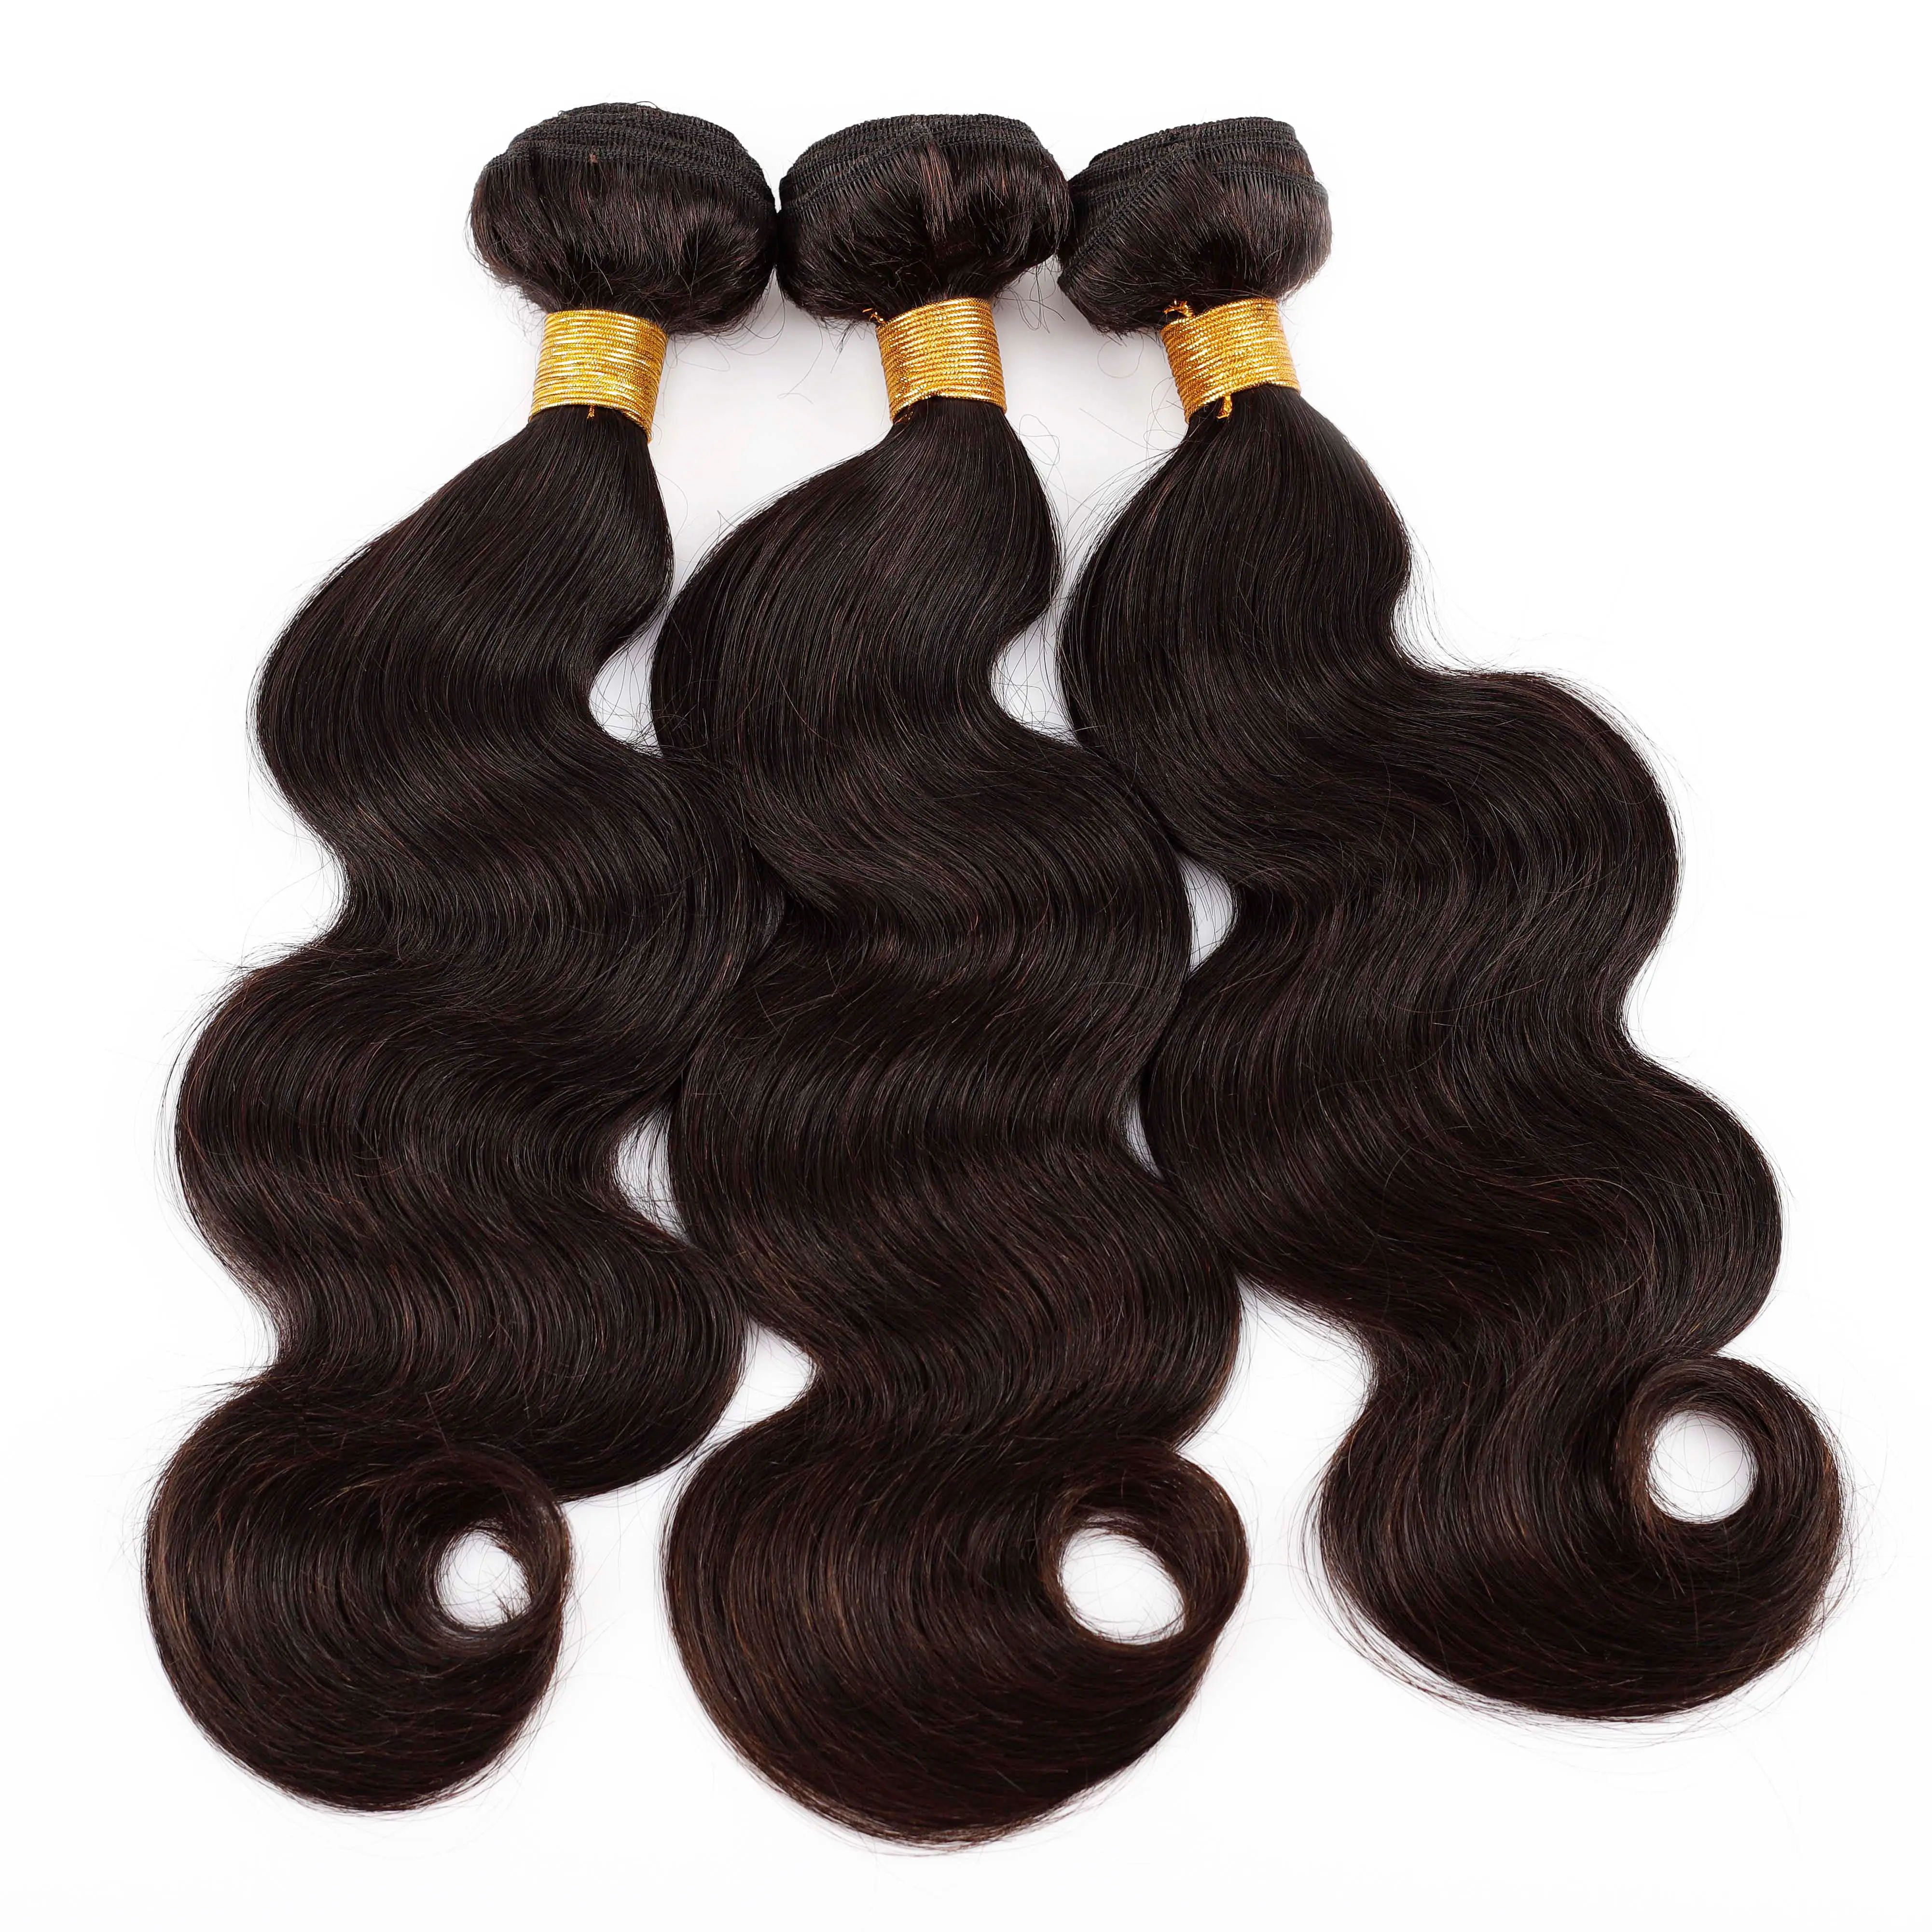 28 34 50 Inches Raw Indian Human Hair Body Wave Peruvian Bundles With Frontal Hair Virgin Hair Bundles Malaysian Set Body Wave